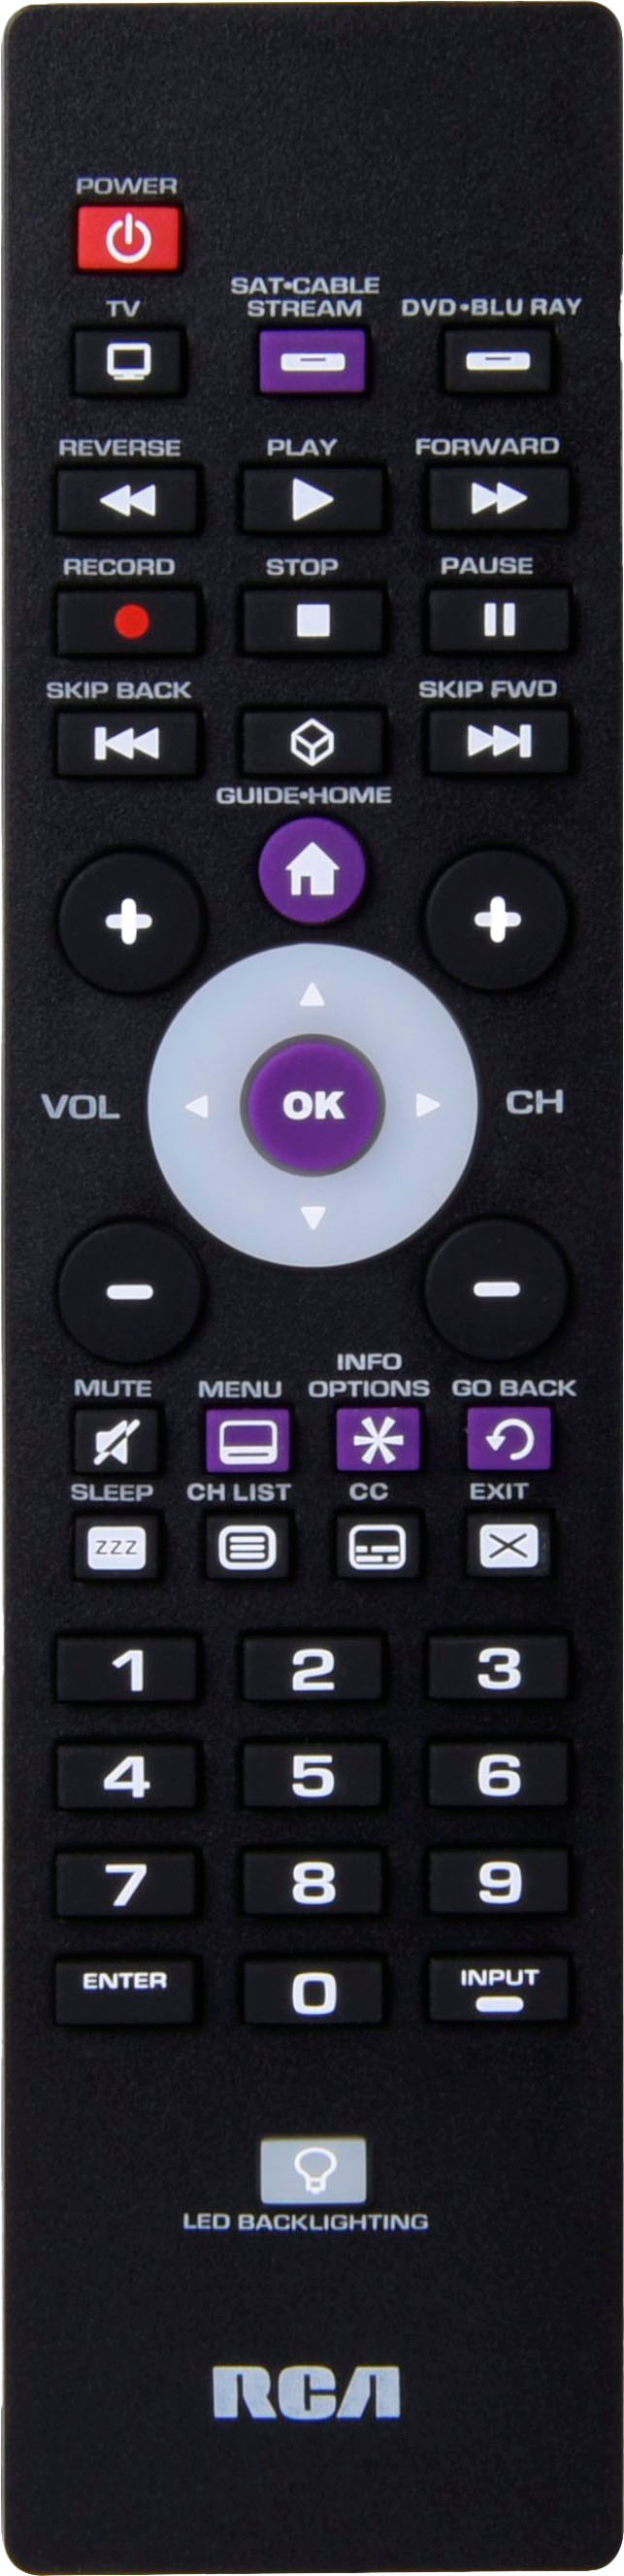 ps4 universal remote control